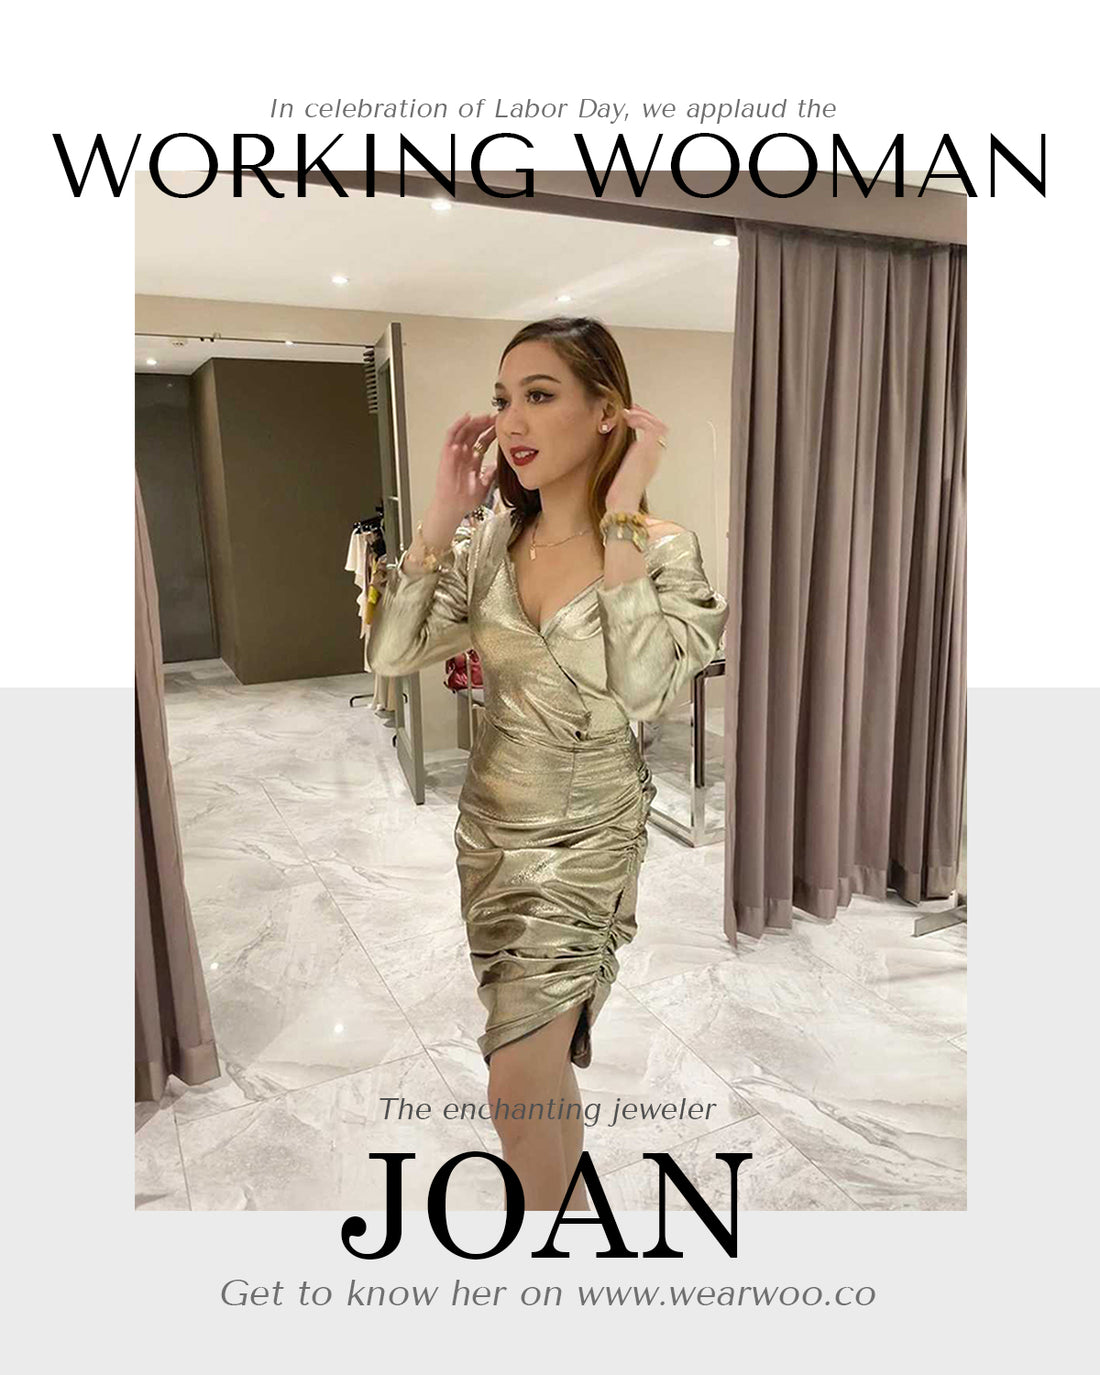 Meet the enchanting jeweler, Joan